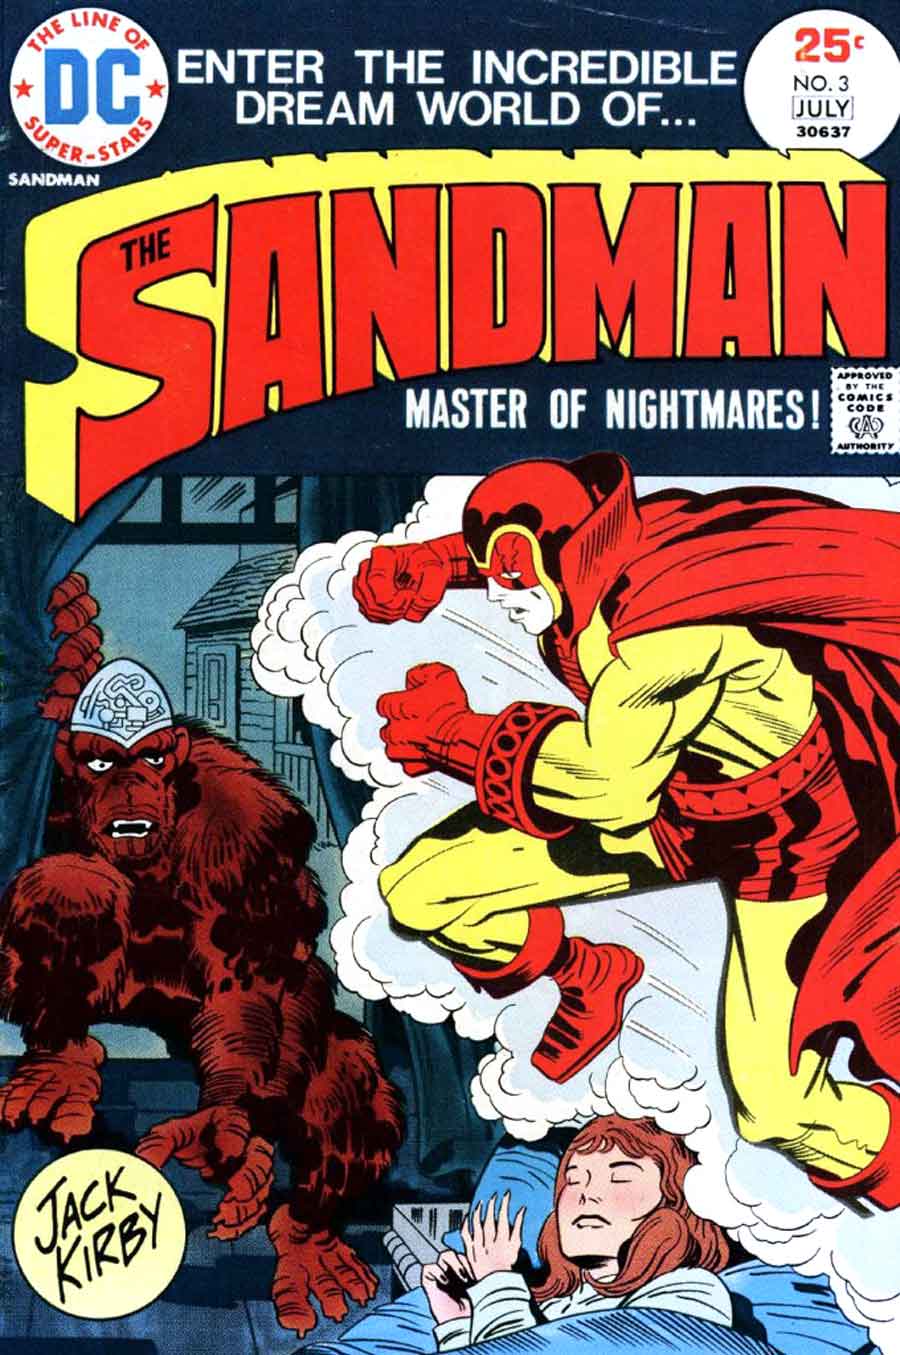 The Sandman v1 #3 dc bronze age comic book cover art by Jack Kirby